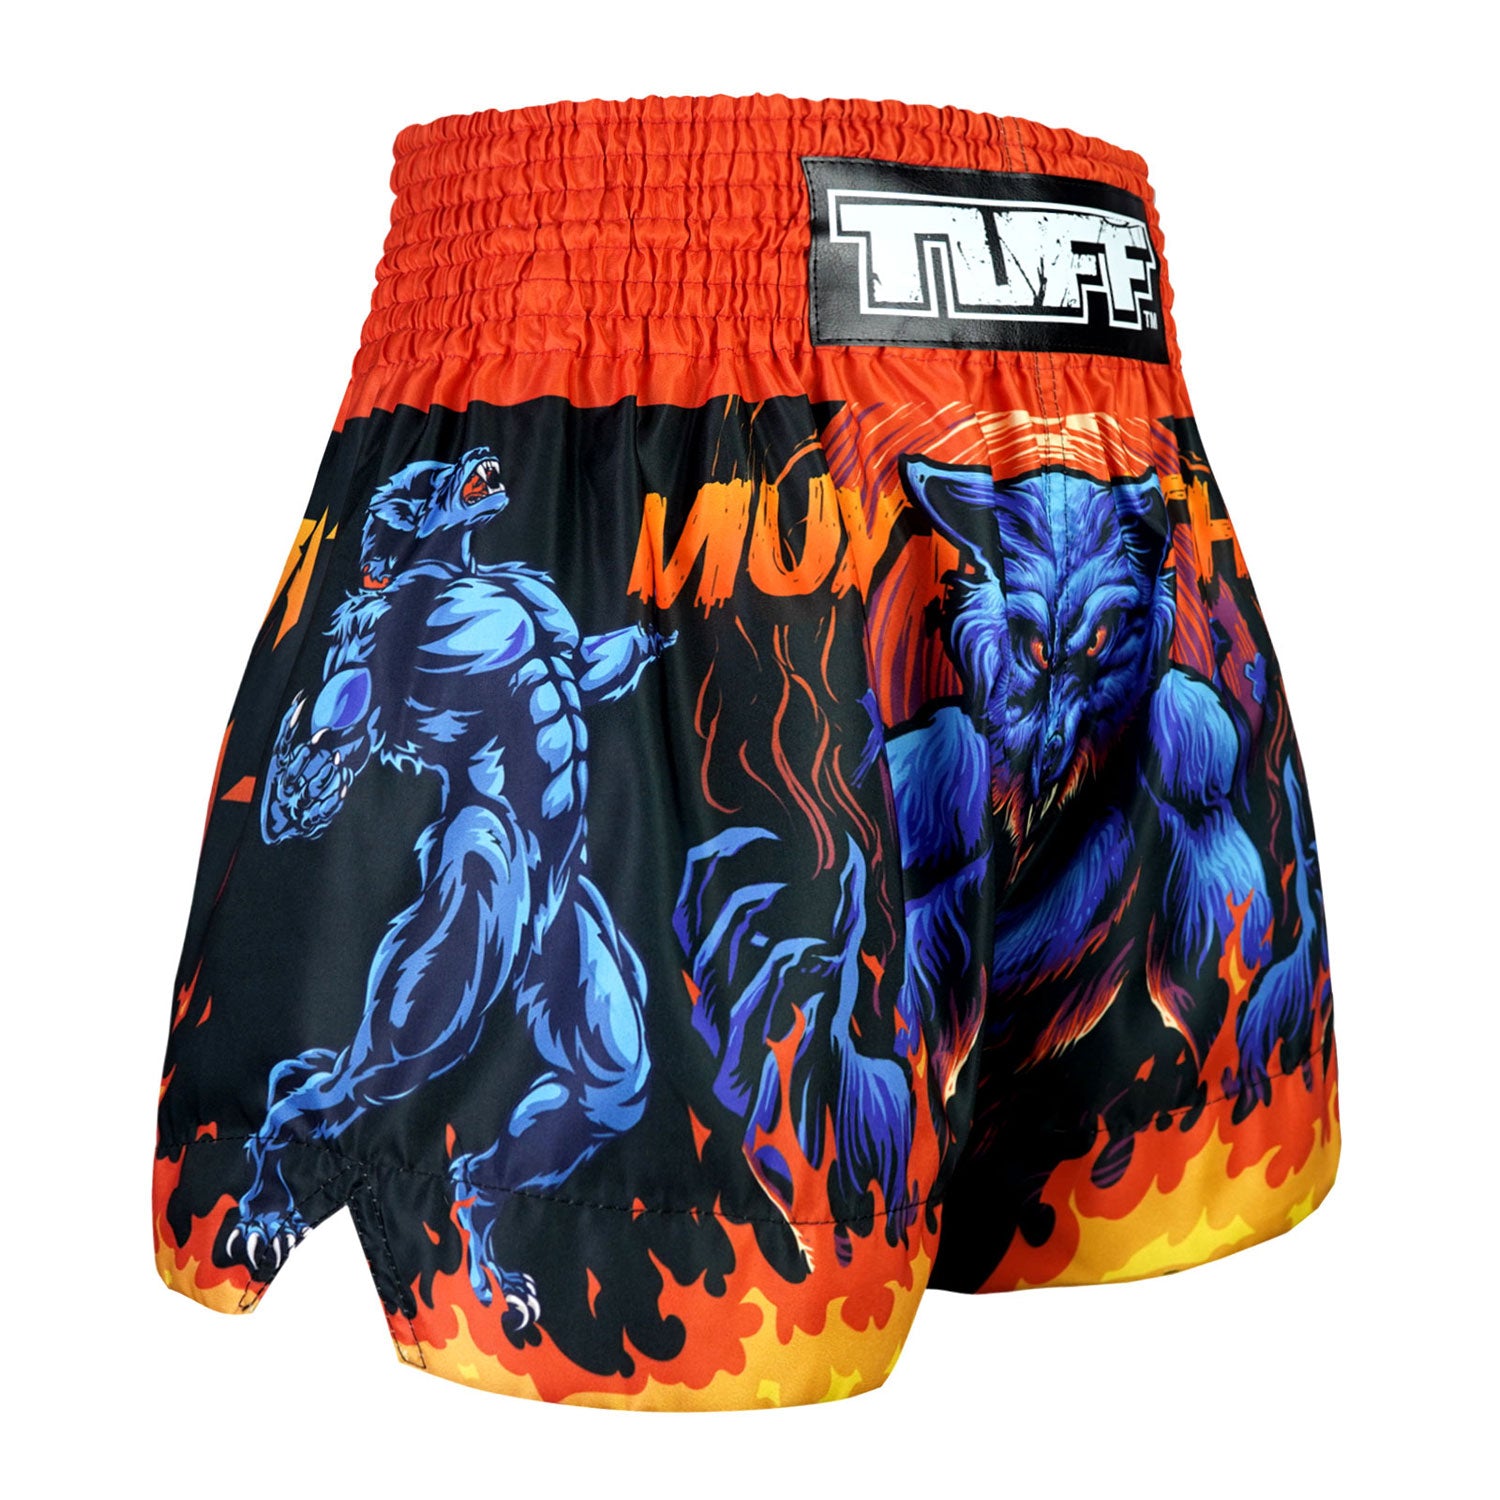 MS683 TUFF Muay Thai Shorts Midnight Werewolf